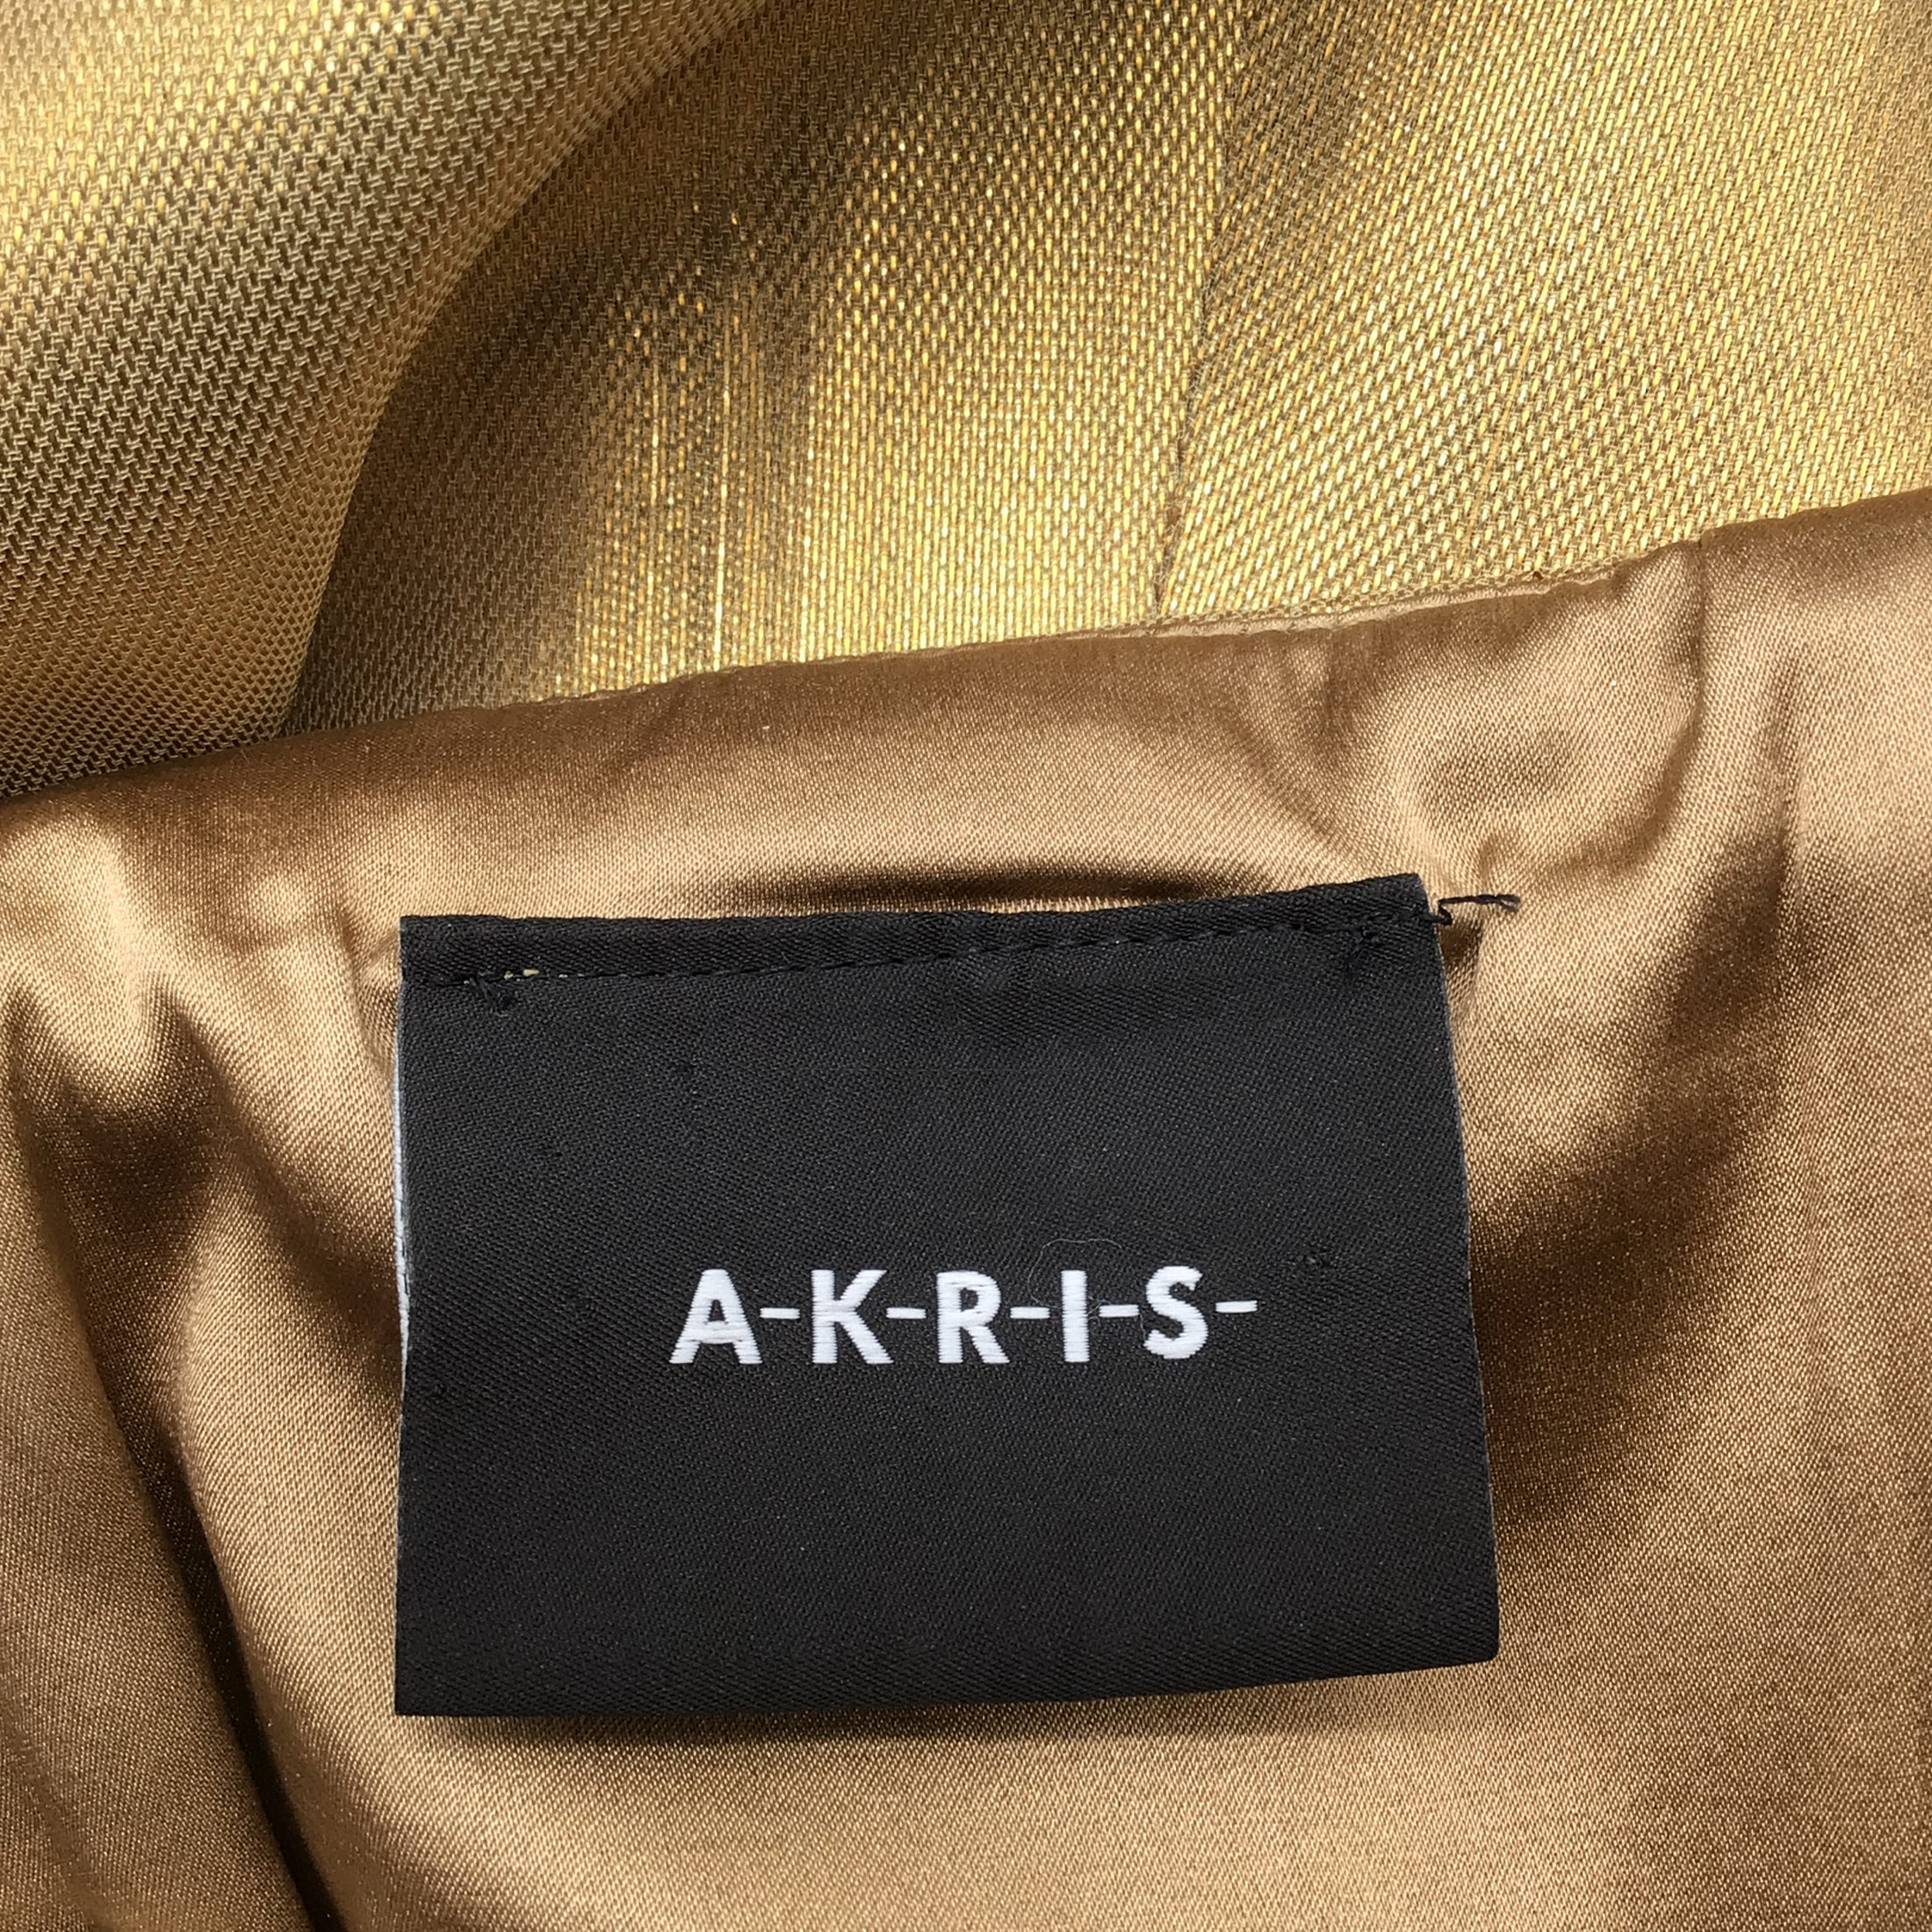 Akris Gold Metallic Pleated Silk Gown / Formal Dress